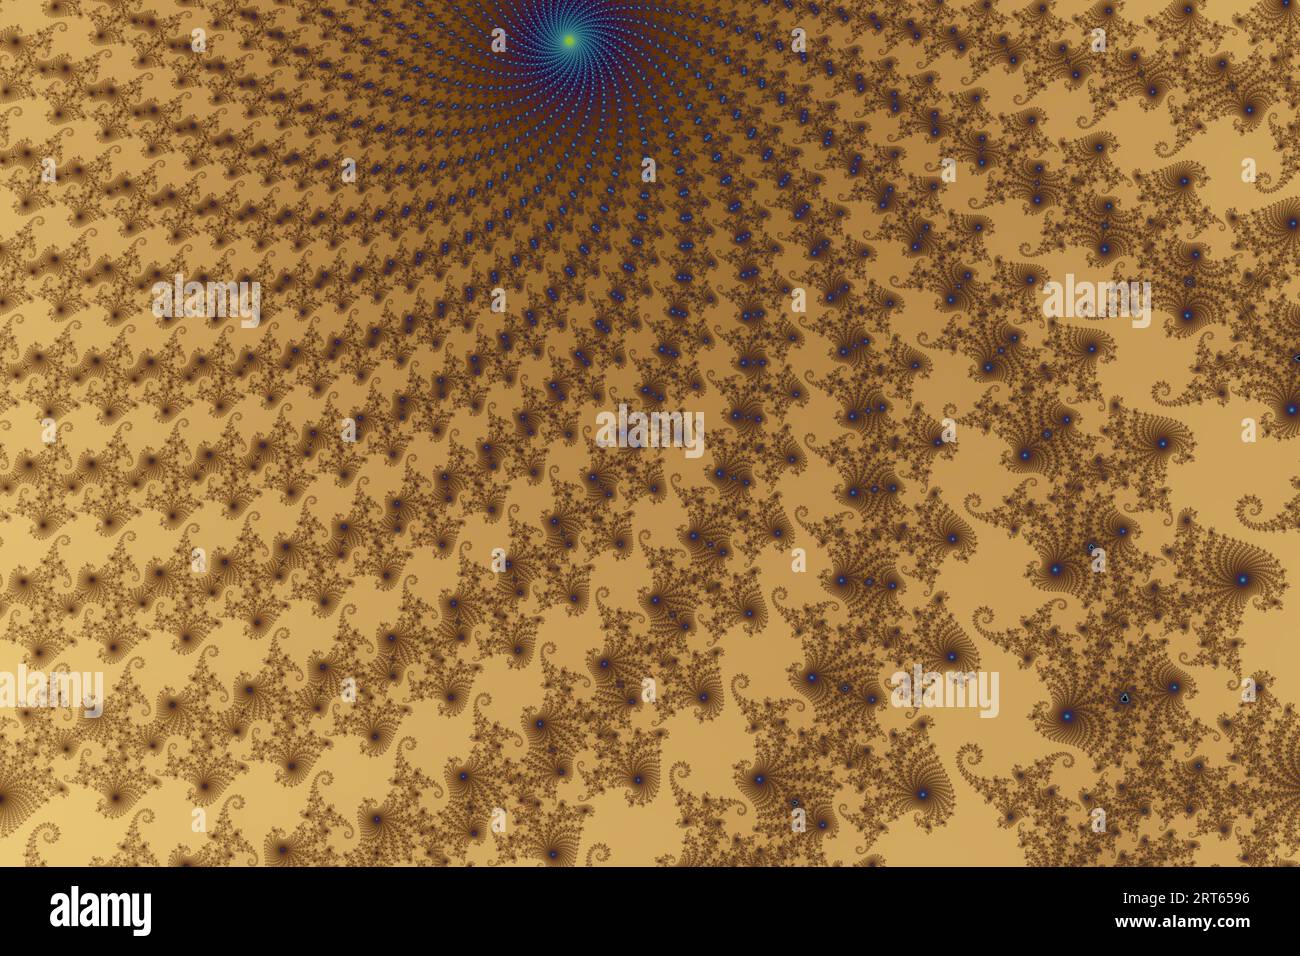 Beautiful Zoom into the Infinite Mathematical Mandelbrot Set Fractal Foto Stock